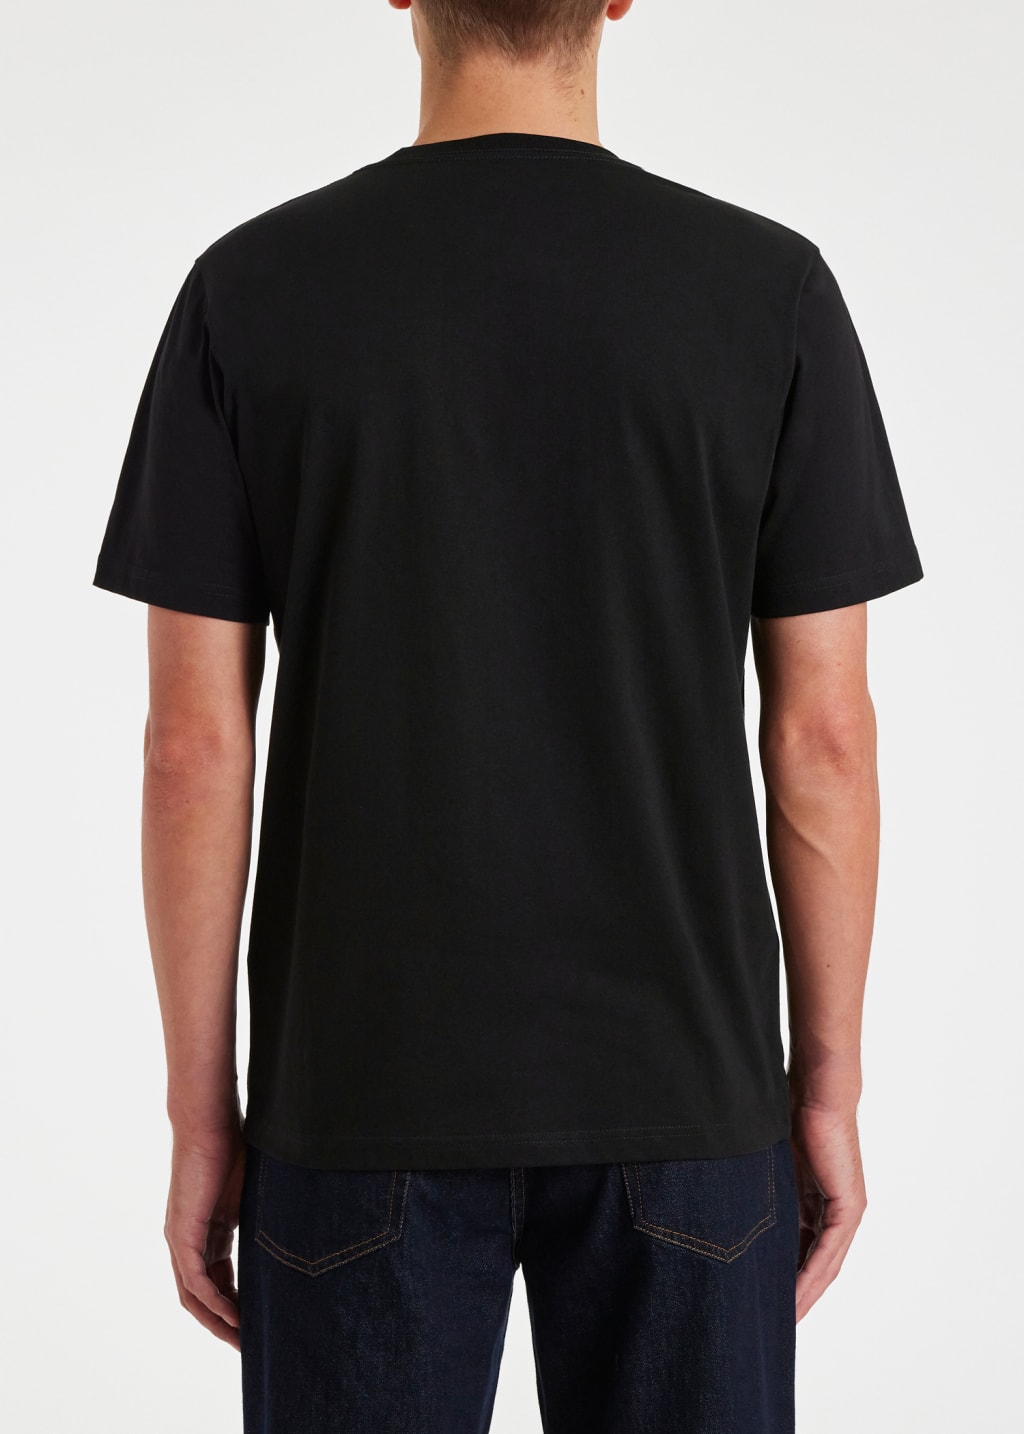 Model View - Organic Cotton 'Astronaut' T-Shirt Paul Smith